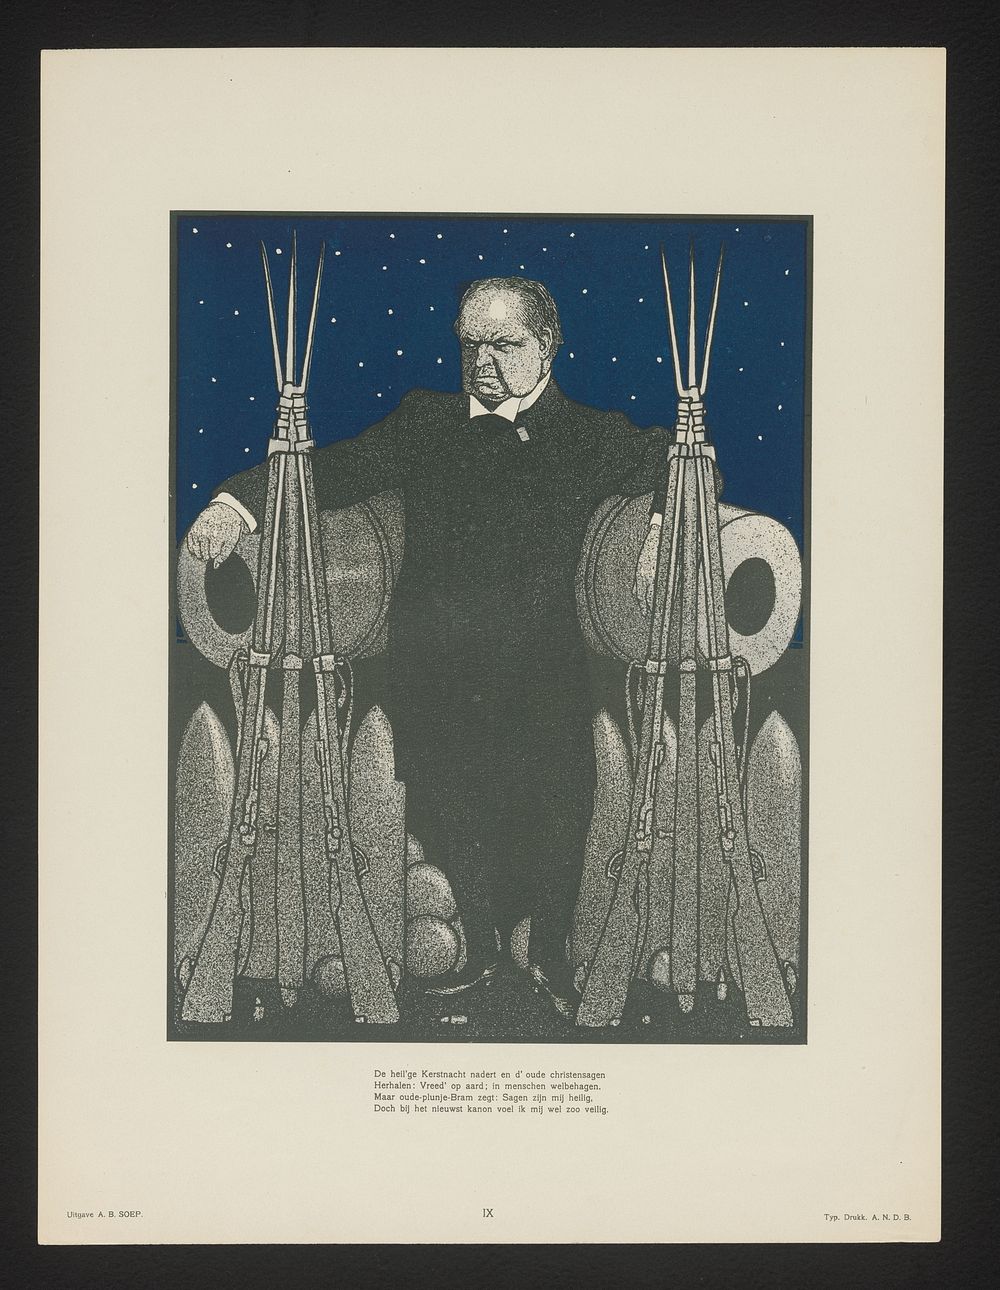 Abraham Kuyper tussen de wapens (1905) by Albert Hahn I, A B Soep and Typ Drukk A N D B